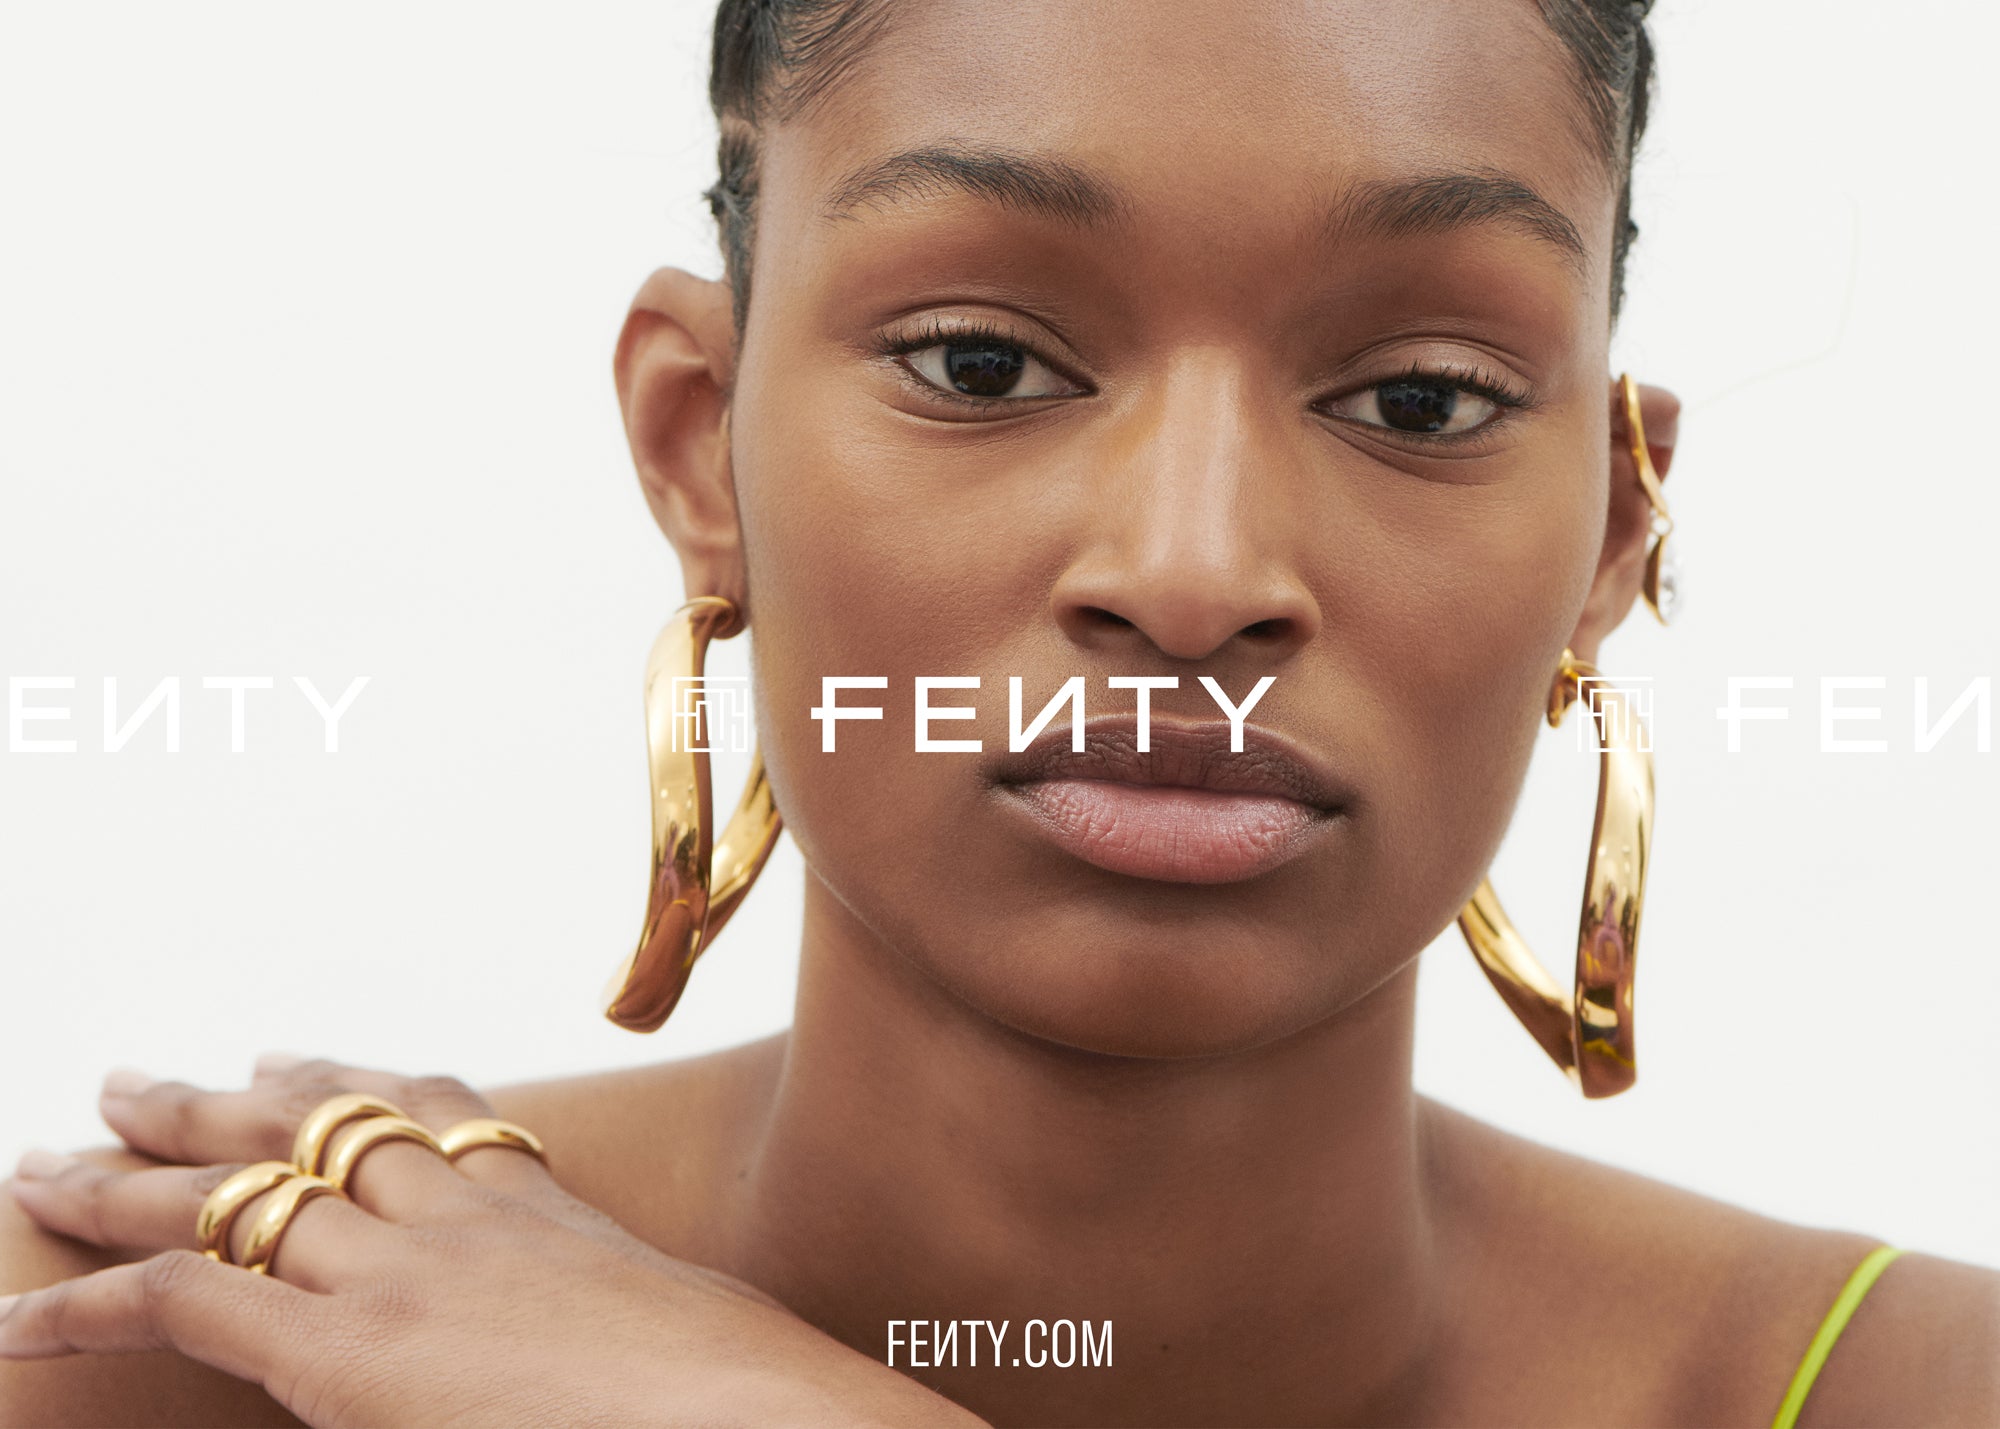 Rihanna's Fenty Collection - How to Wear Fenty